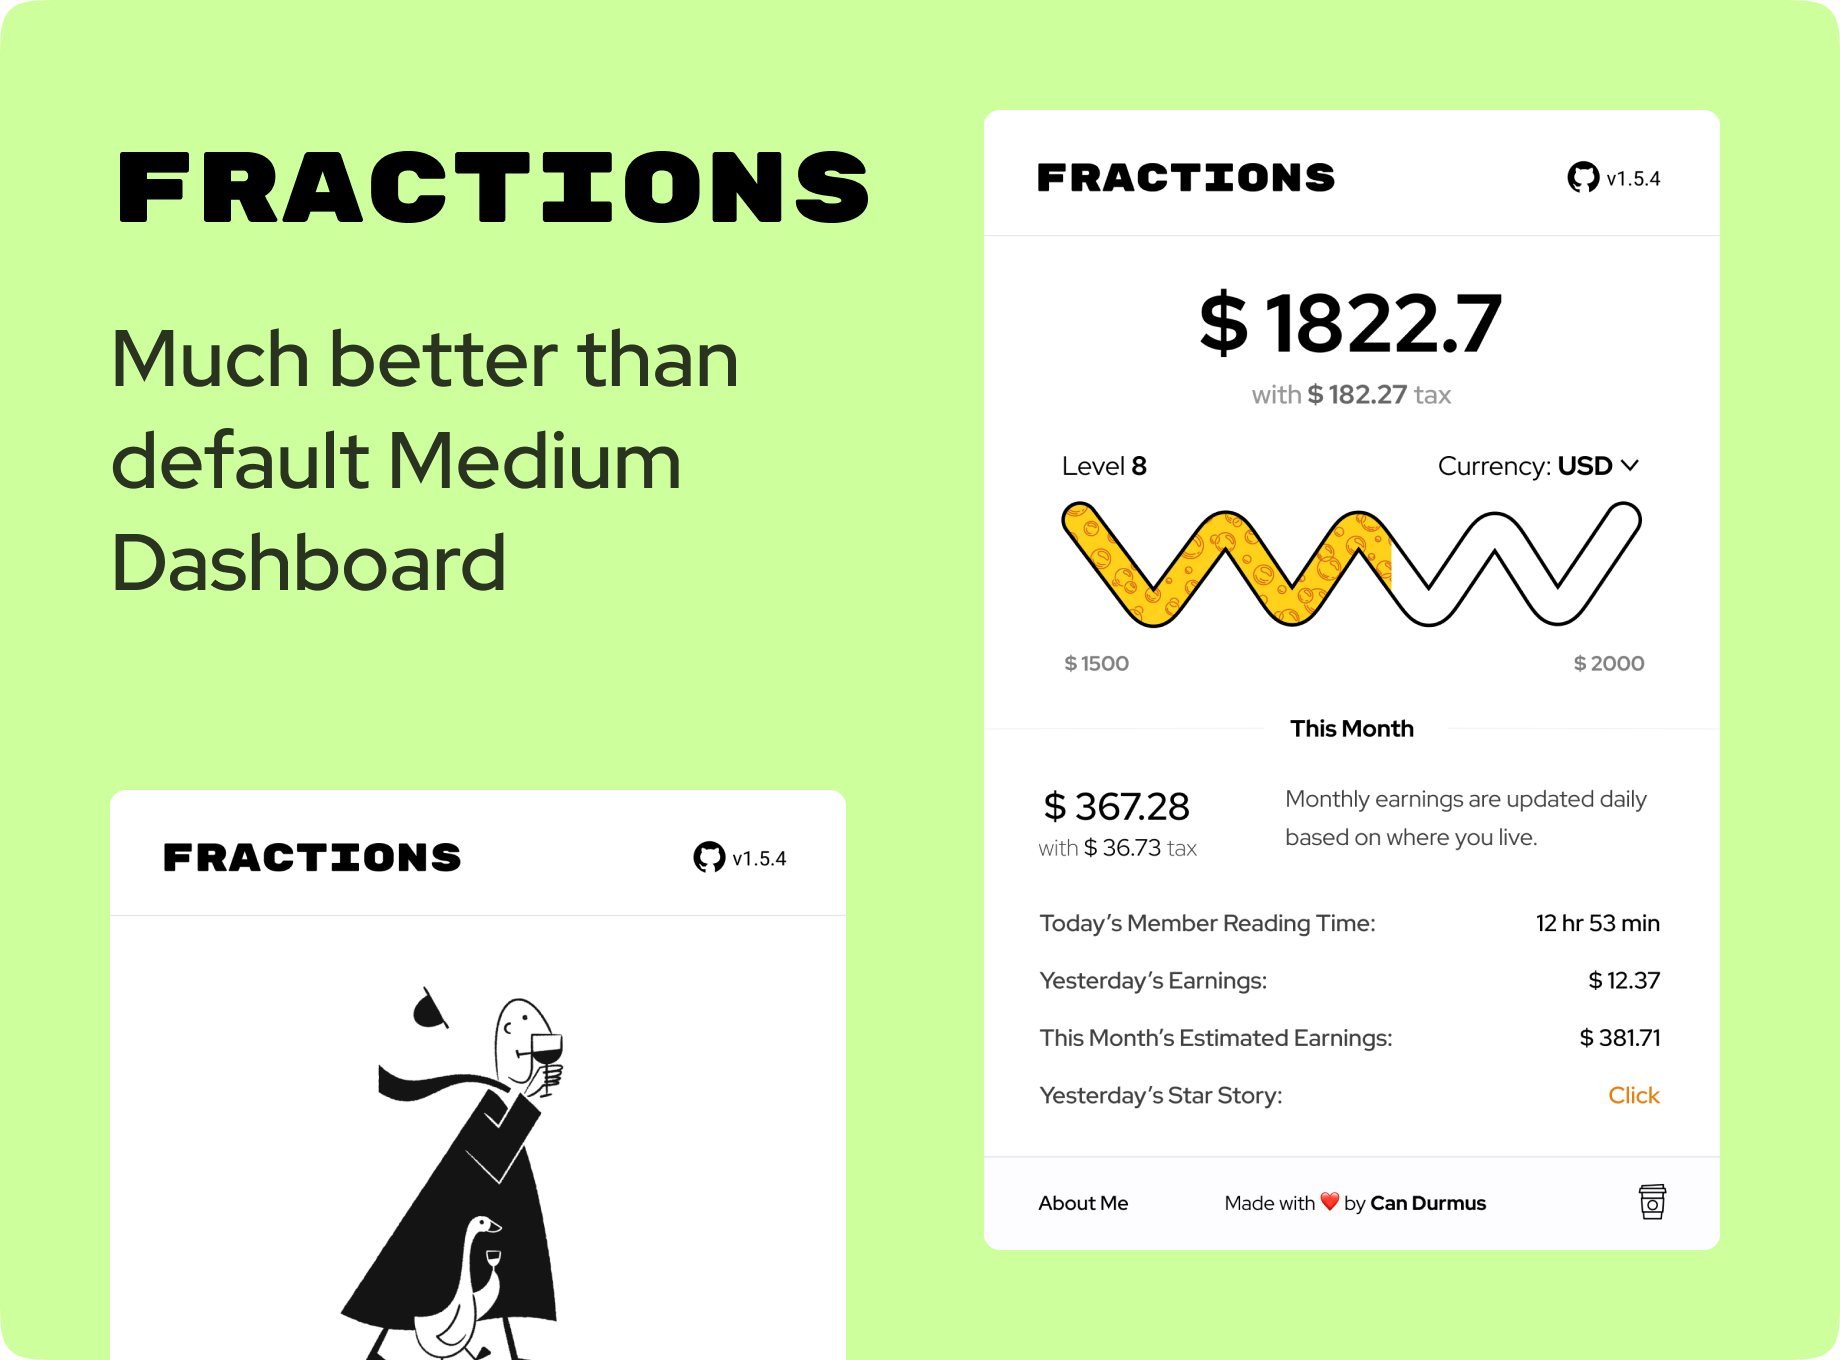 Fractions - Medium Earnings